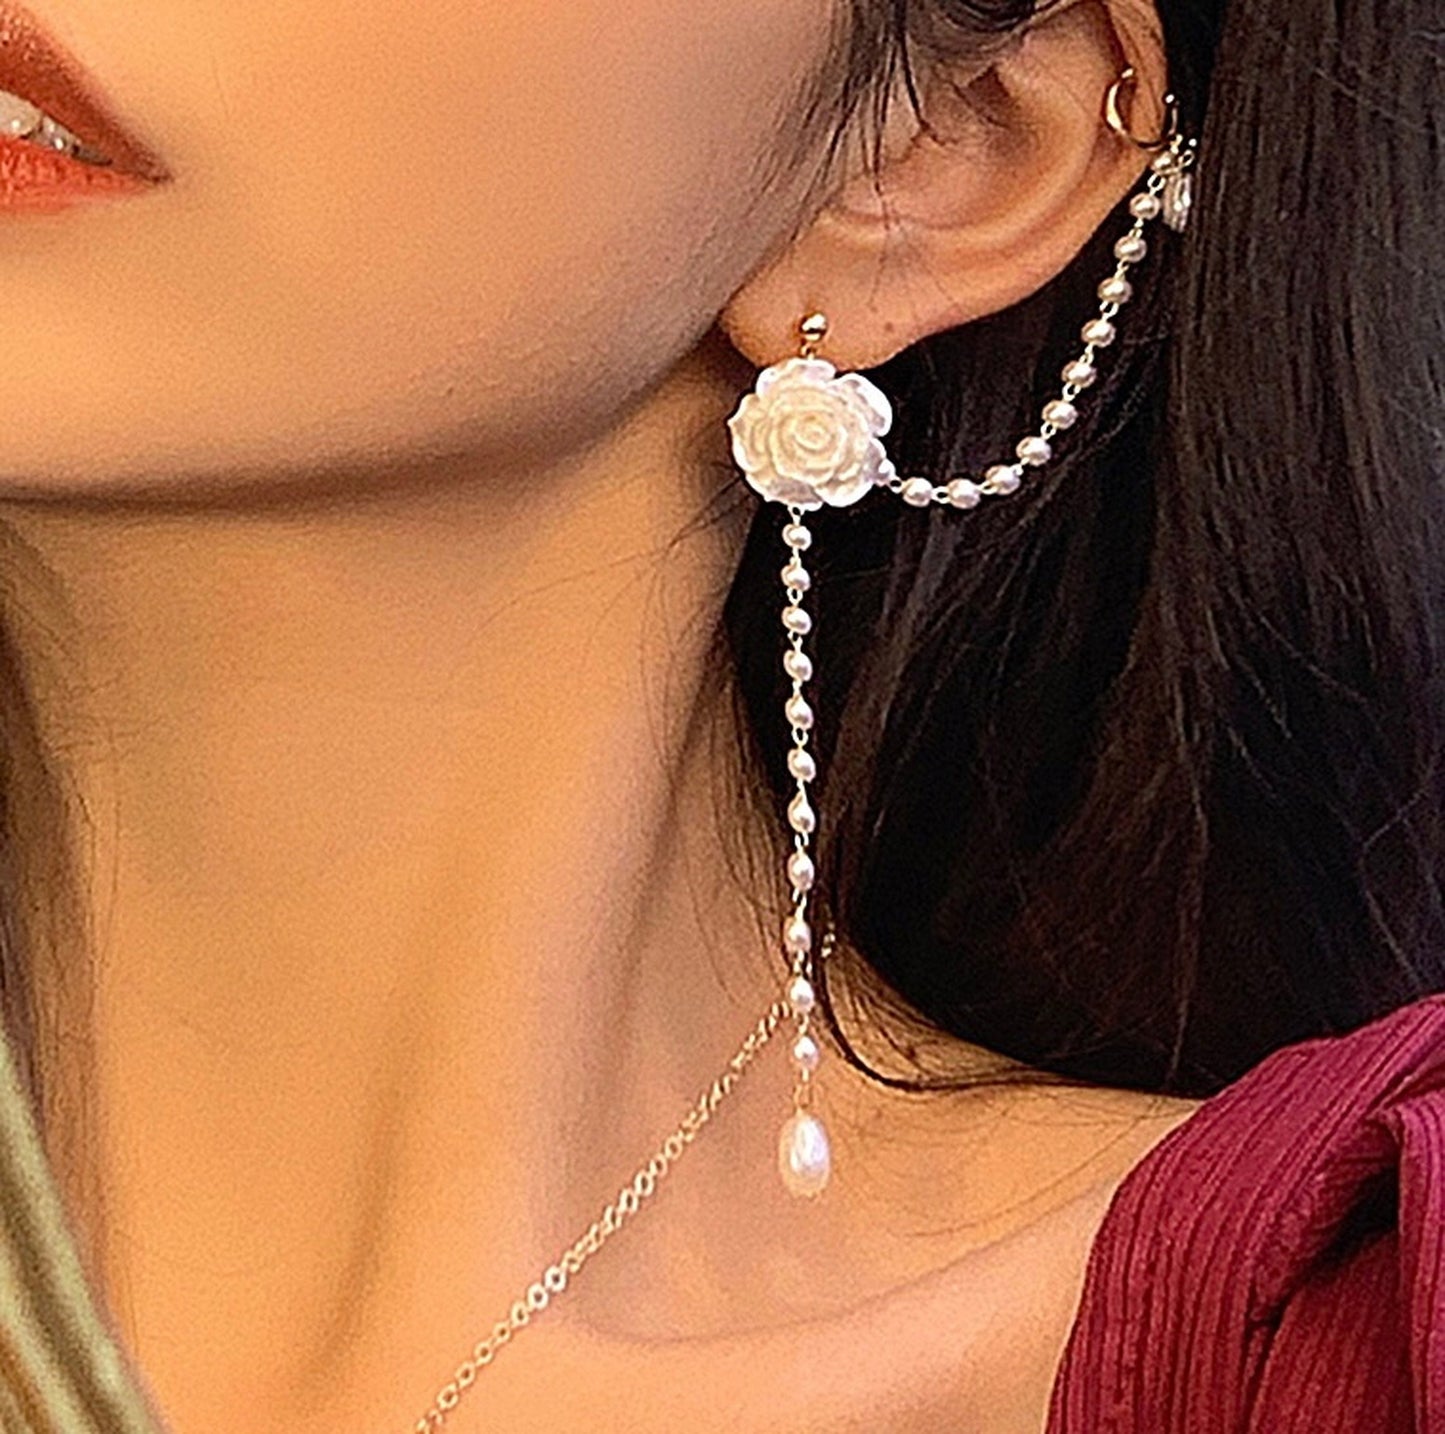 Flower rose cuff earrings, Pearl ear wrap, White floral ear cuff, Long dangle ear climber, Bridesmaid earrings gift, Vintage style ear cuff